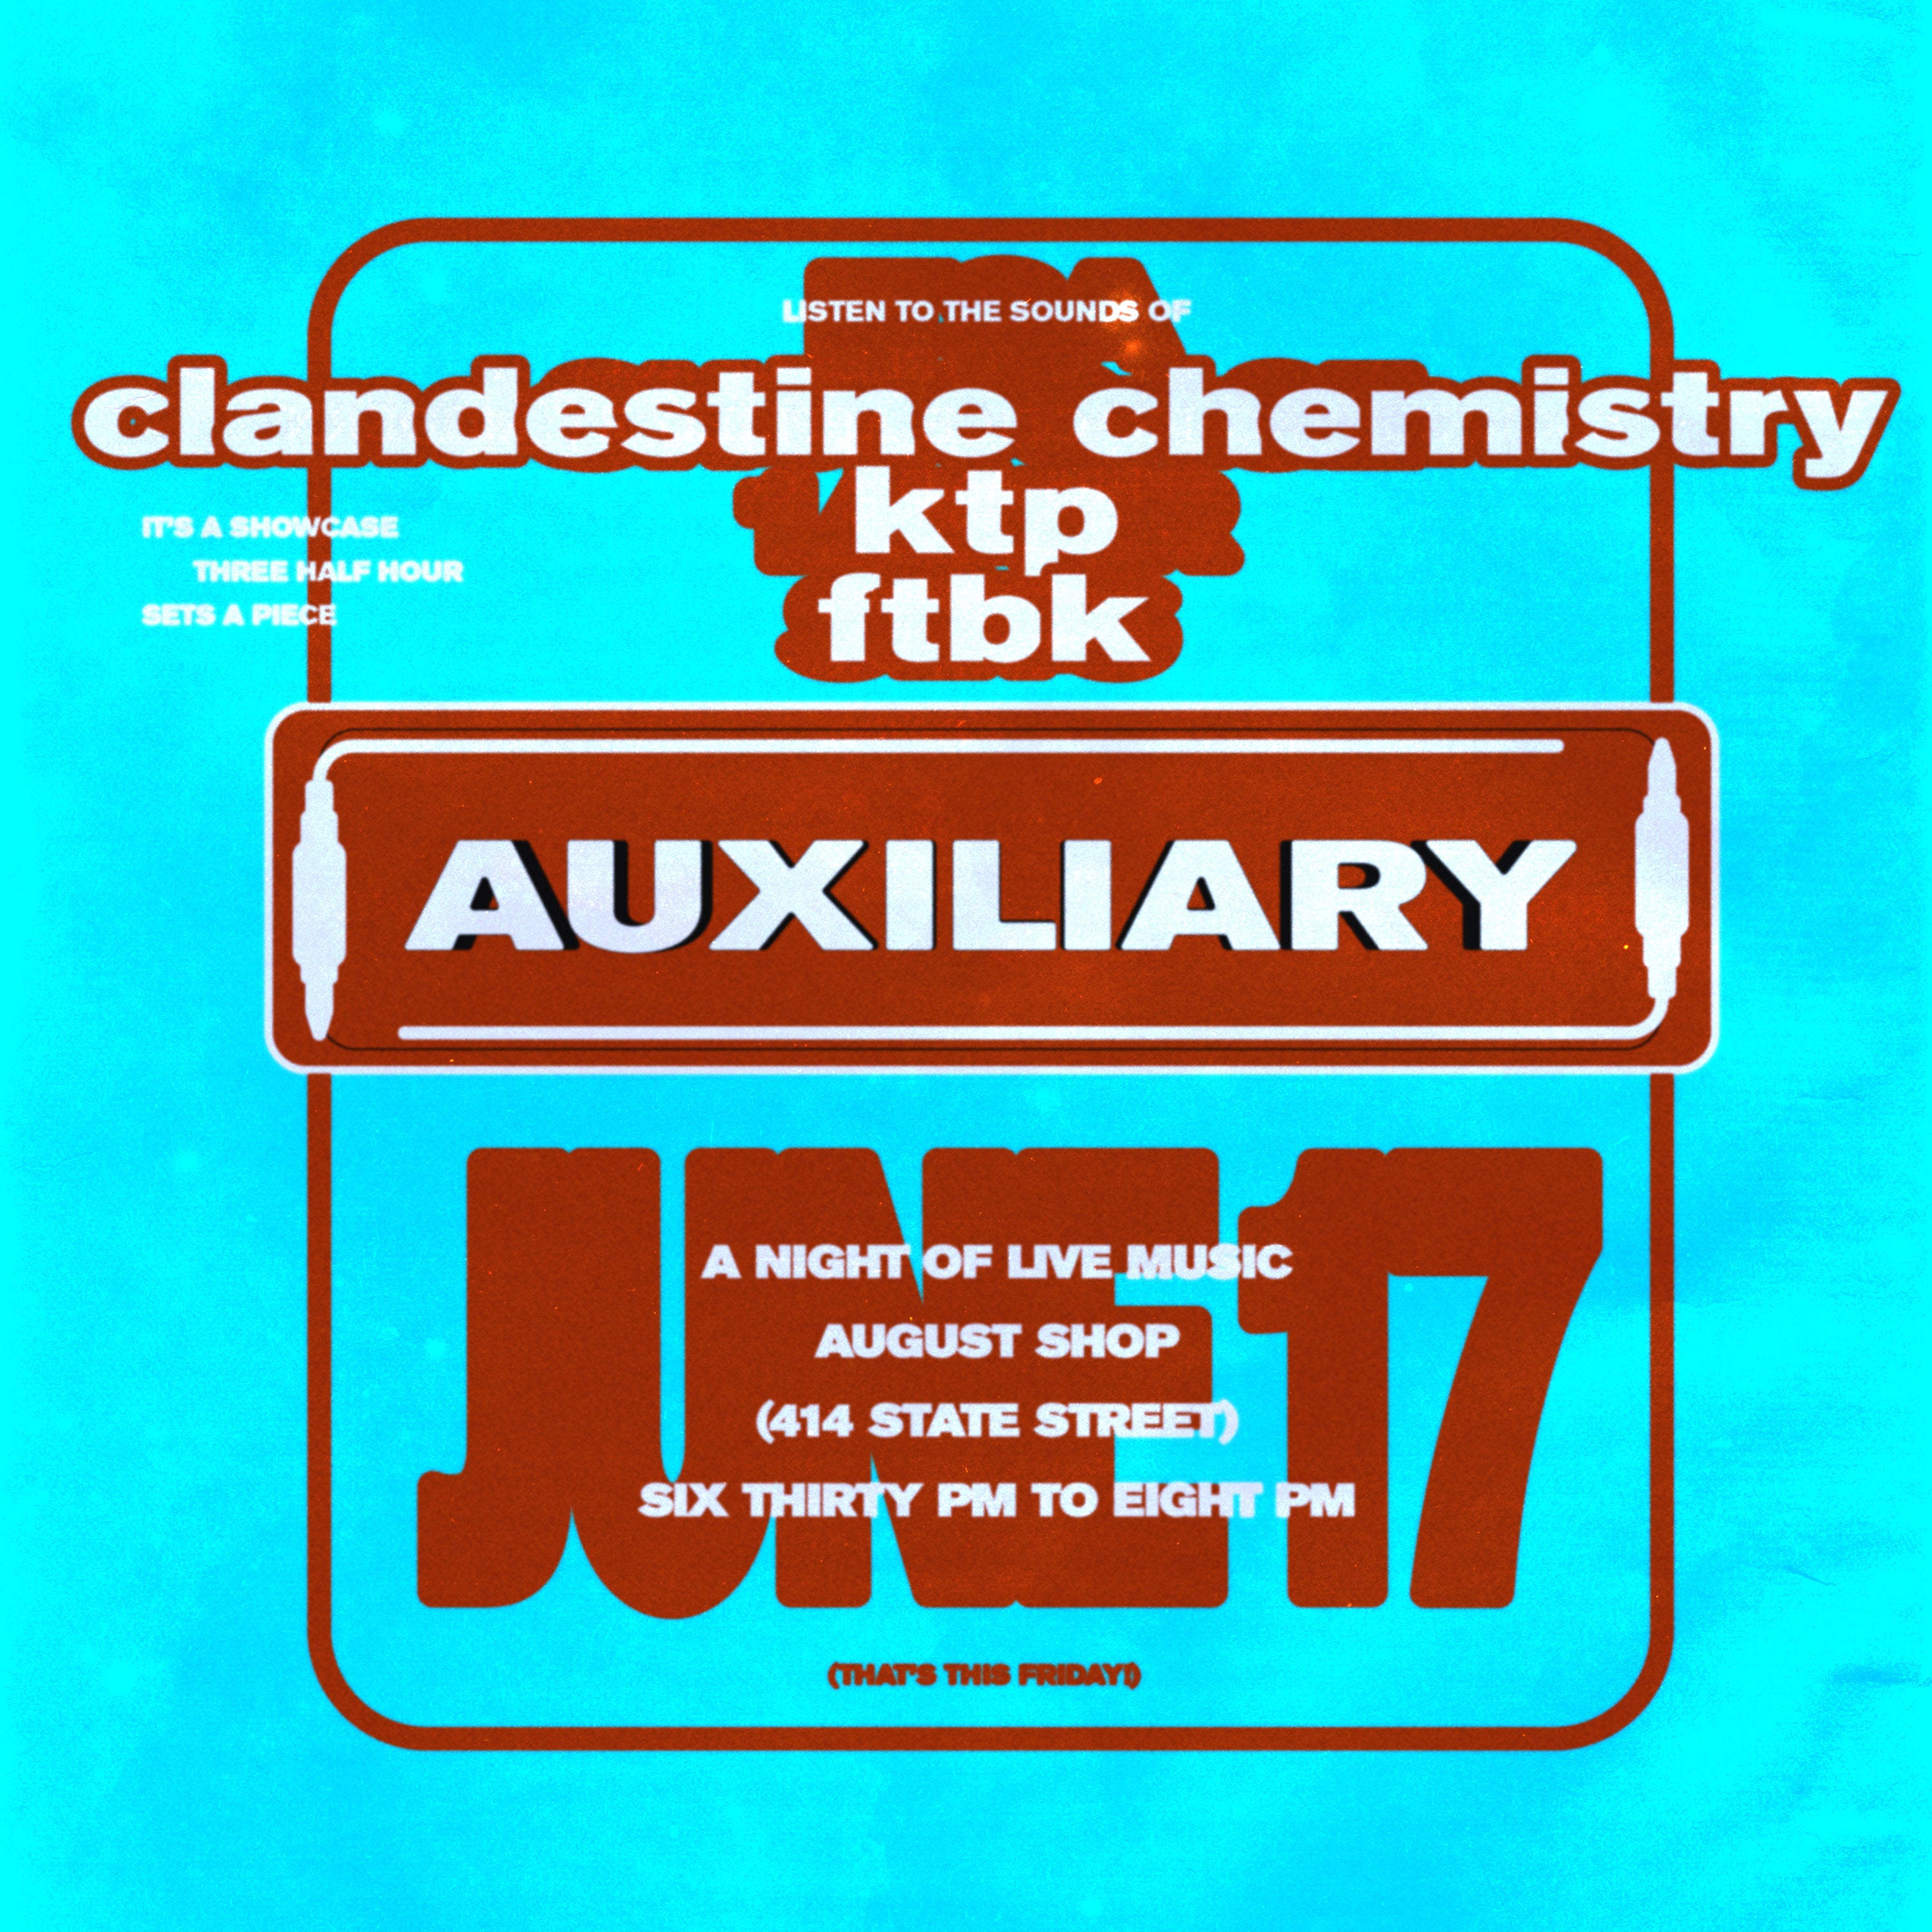 AUGUST AUX :: AUXILIARY 07 CLANDESTINE CHEMISTRY, KTP, FTBK